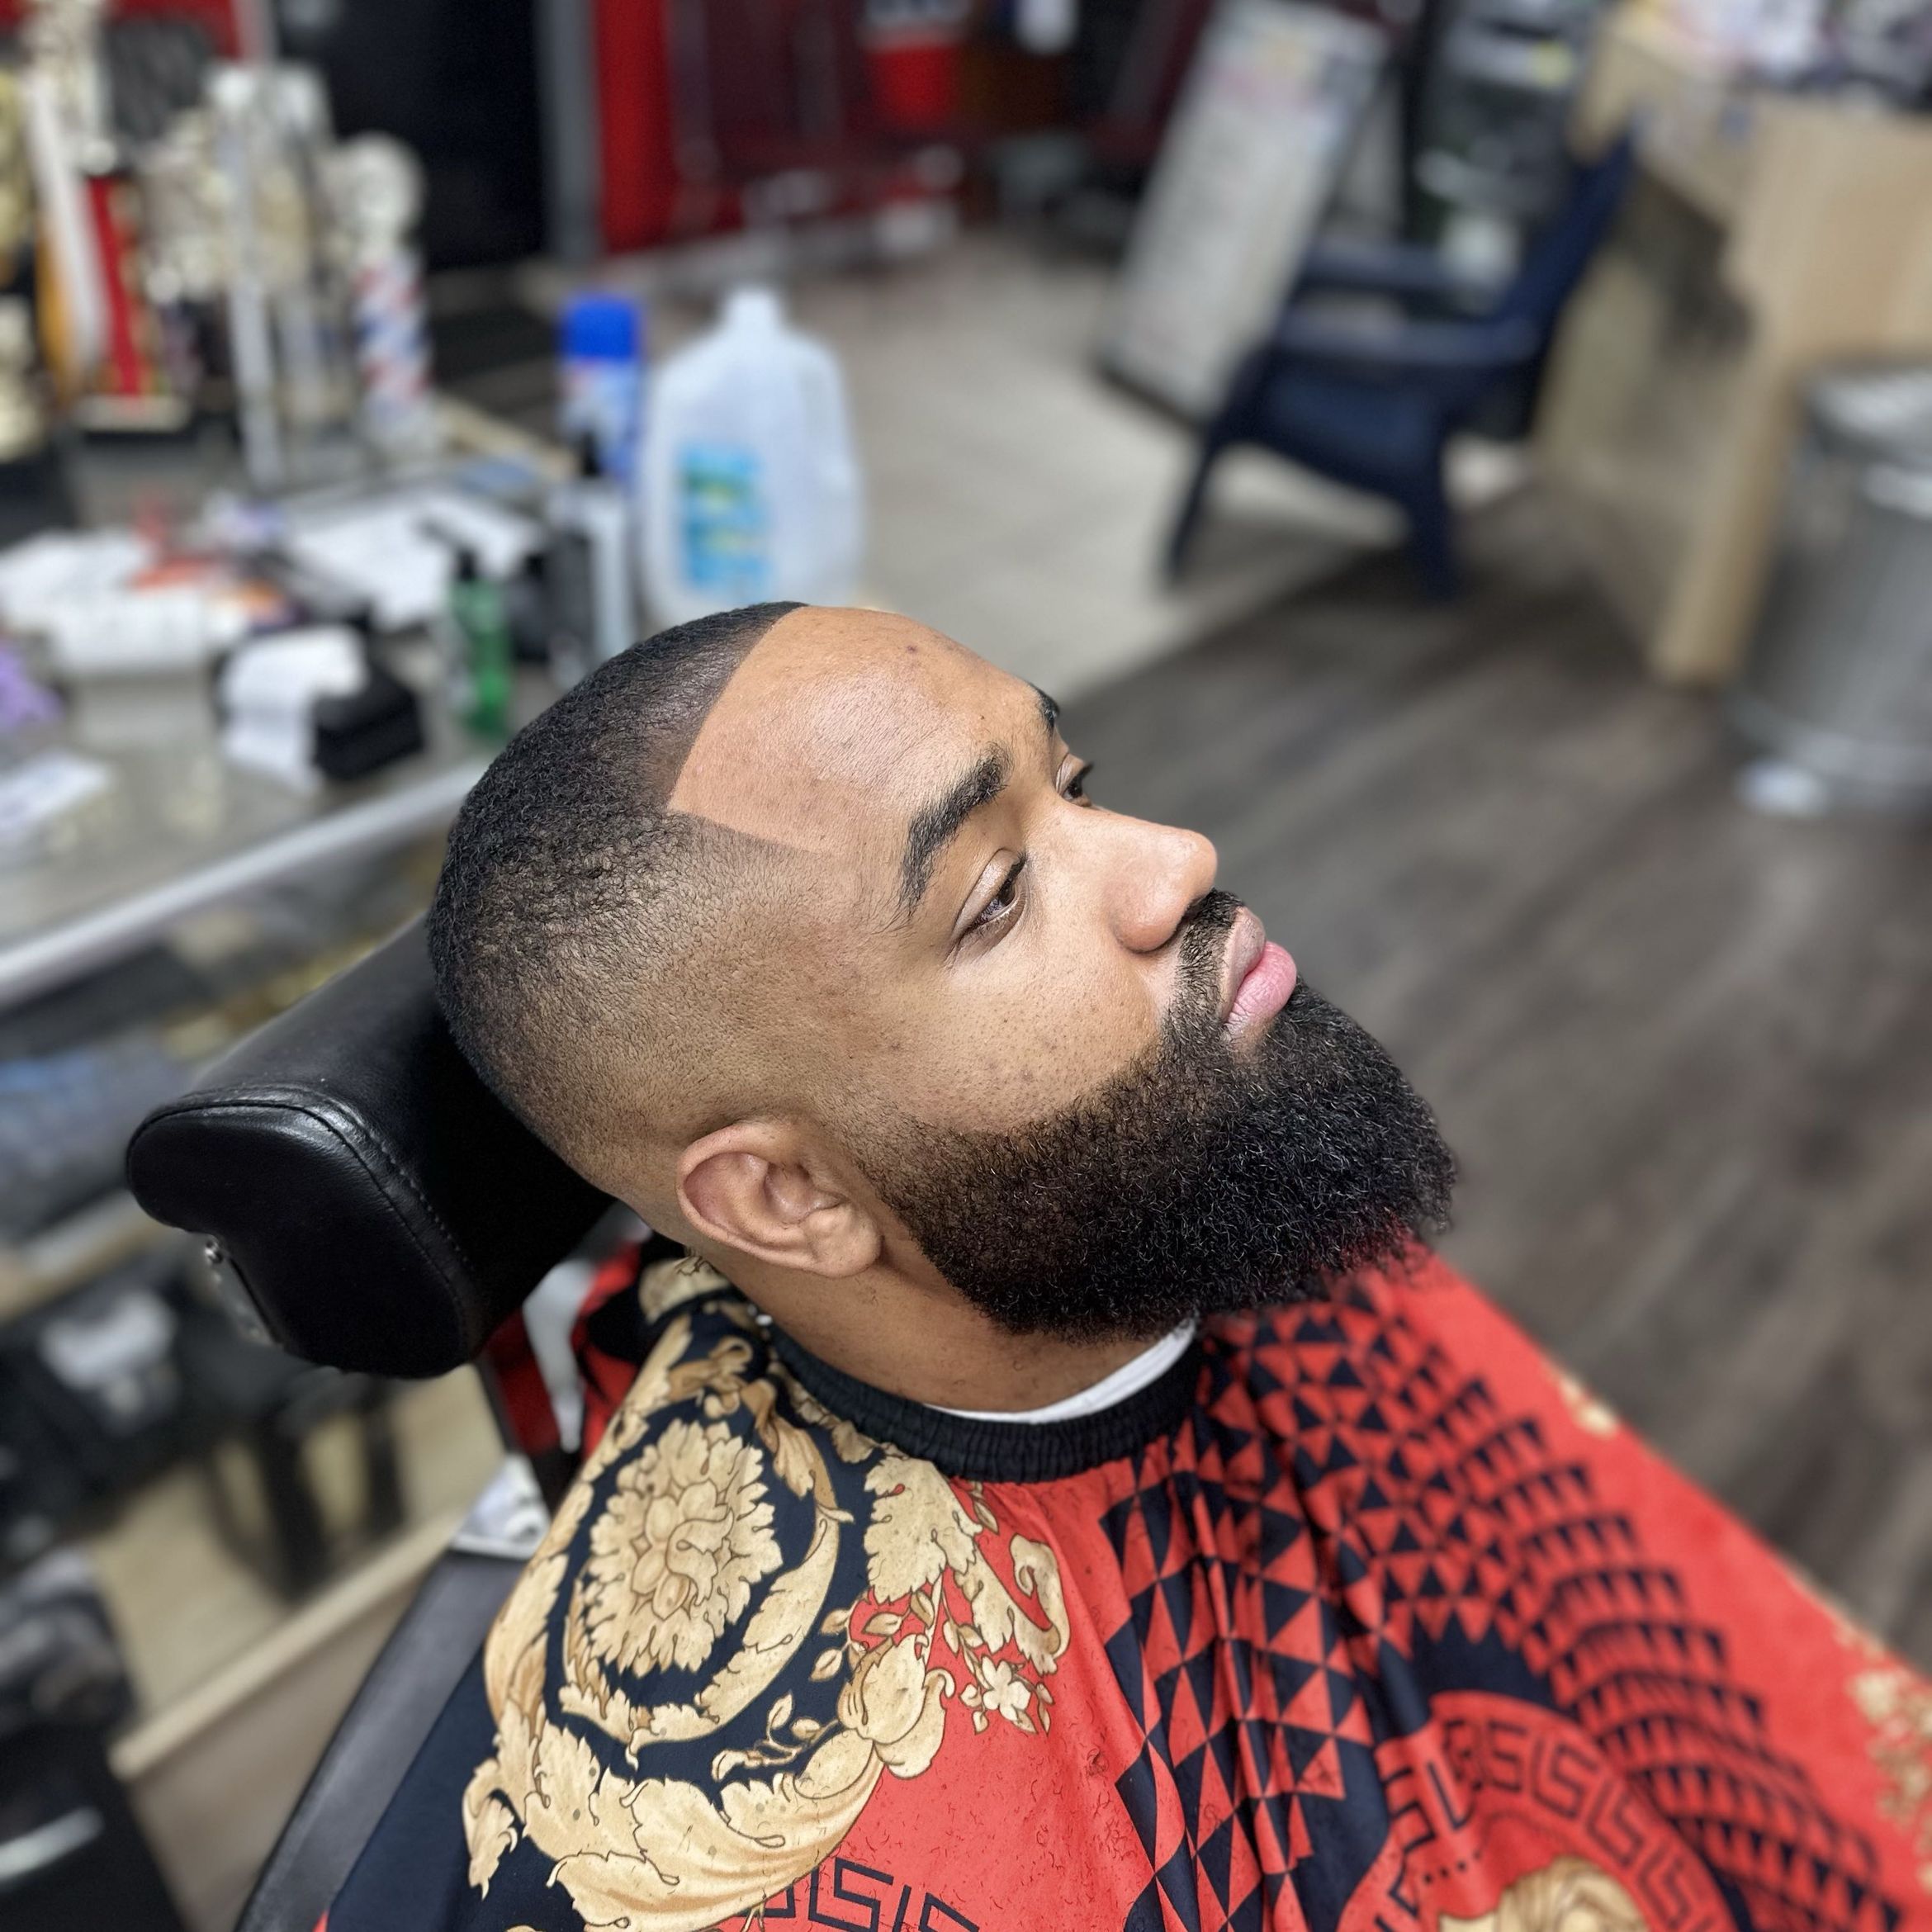 Jerz Haircut & Beard portfolio